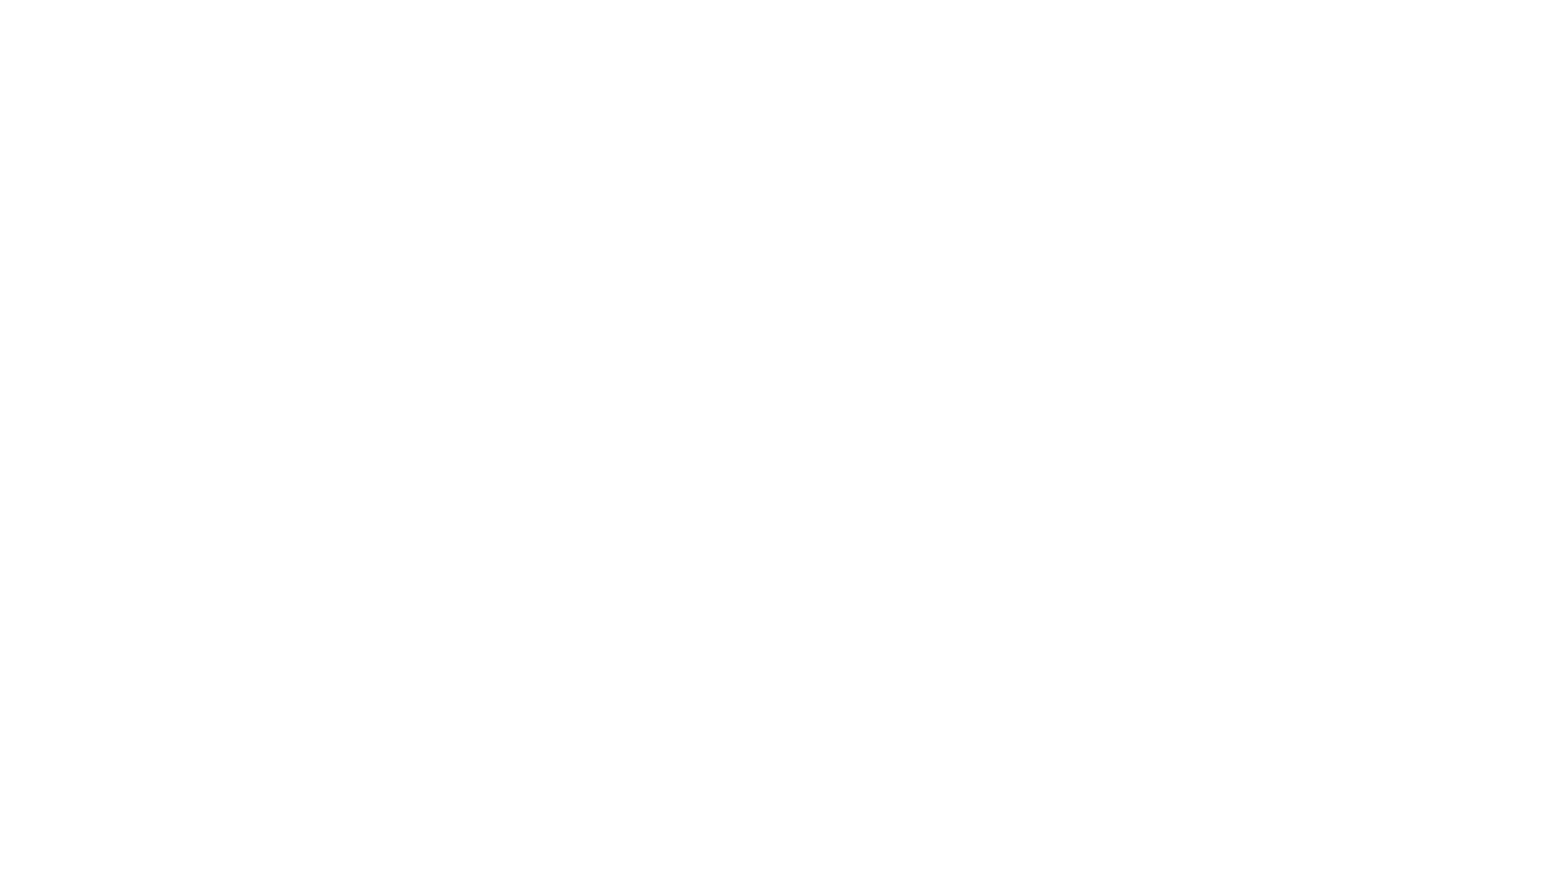 QLM Life & Medical Insurance Company logo large for dark backgrounds (transparent PNG)